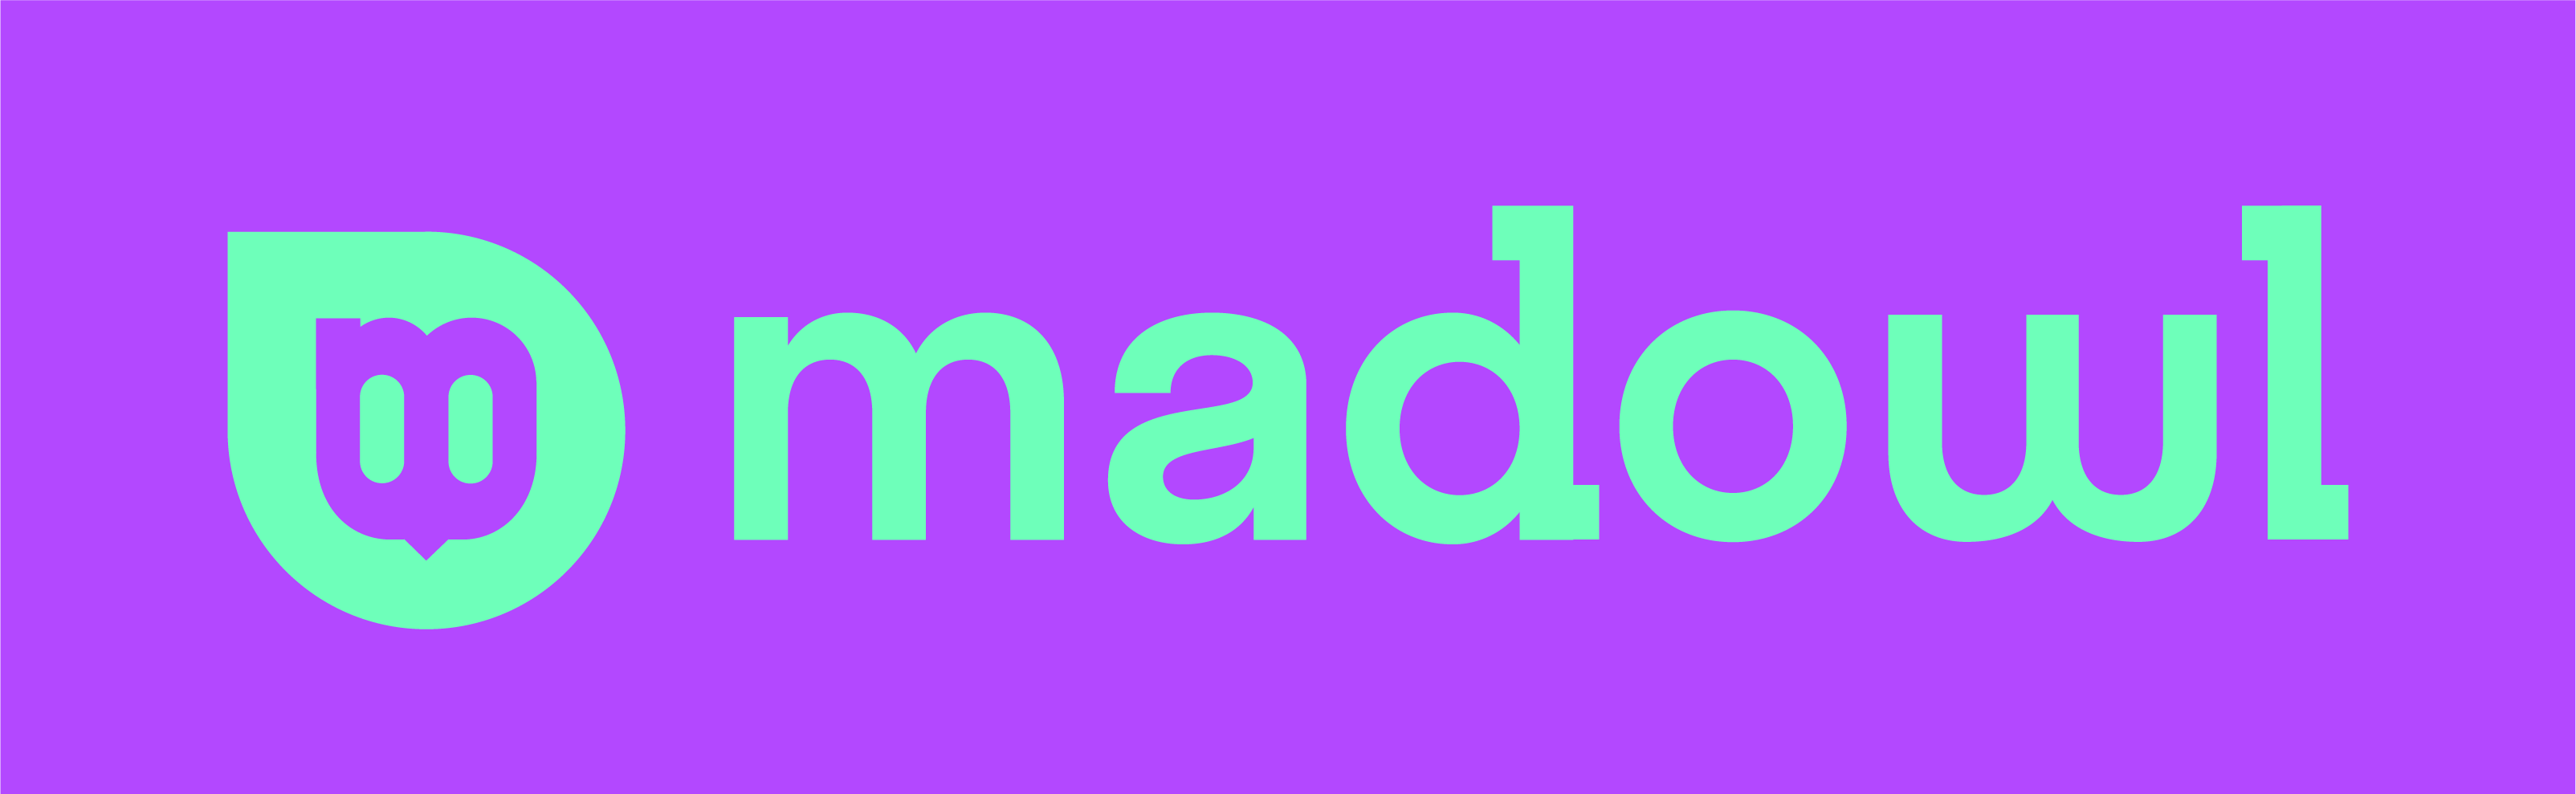 Mad Owl logo